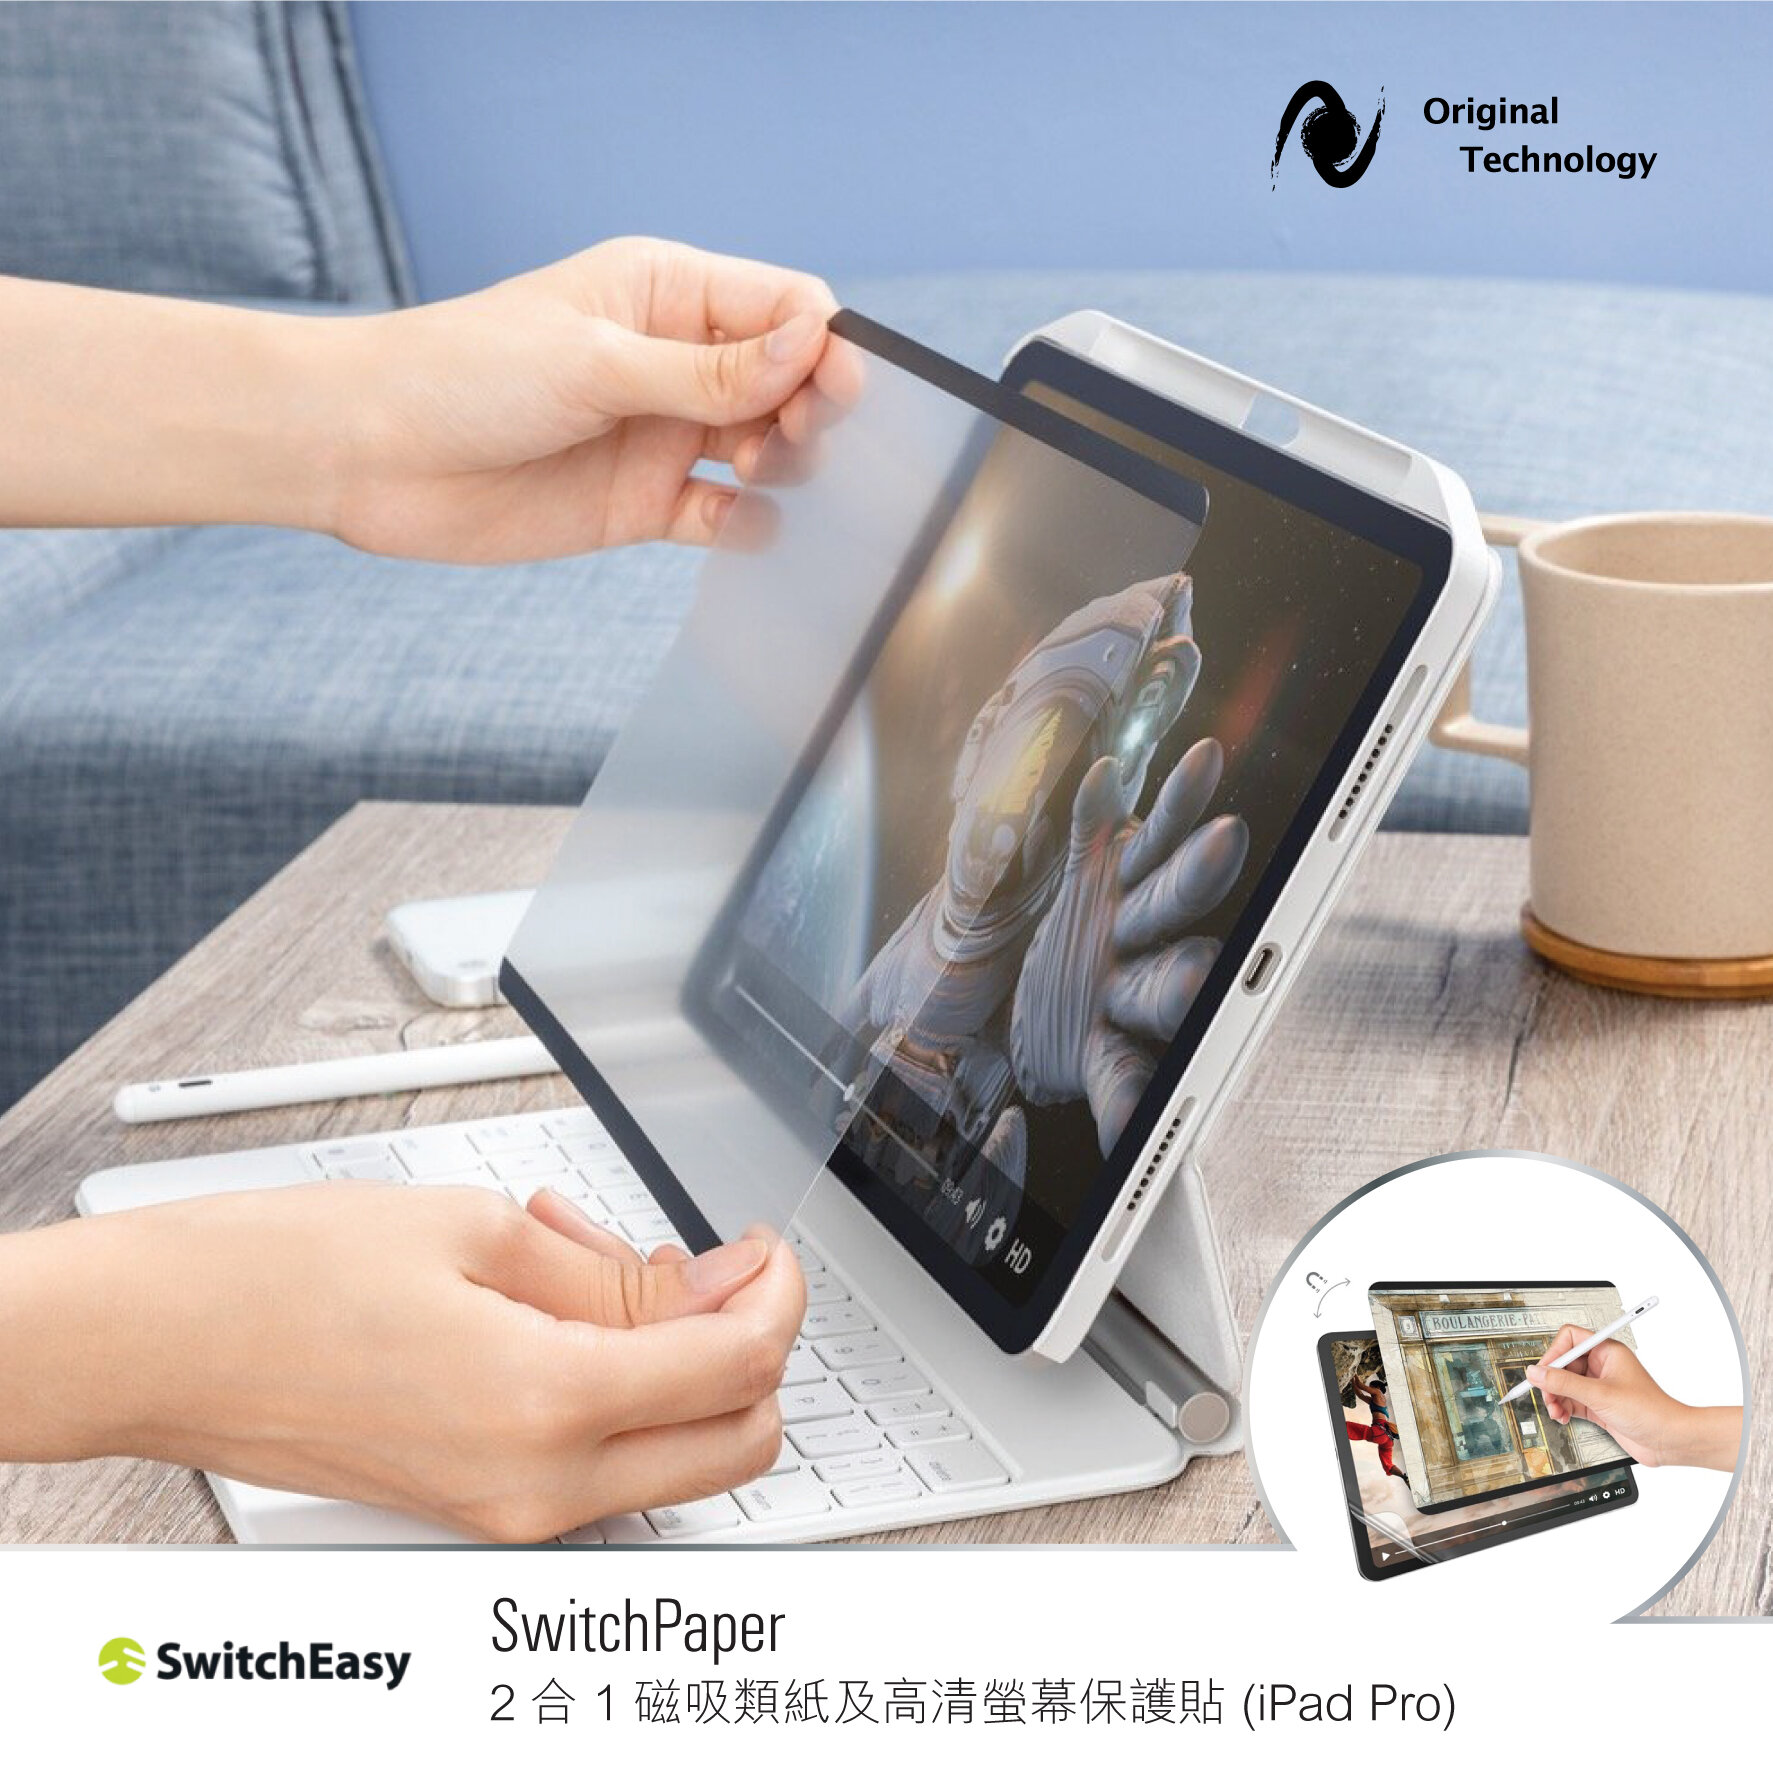 可繪圖及清洗的 iPad Pro 磁力保護貼 – SwitchPaper 2-in-1